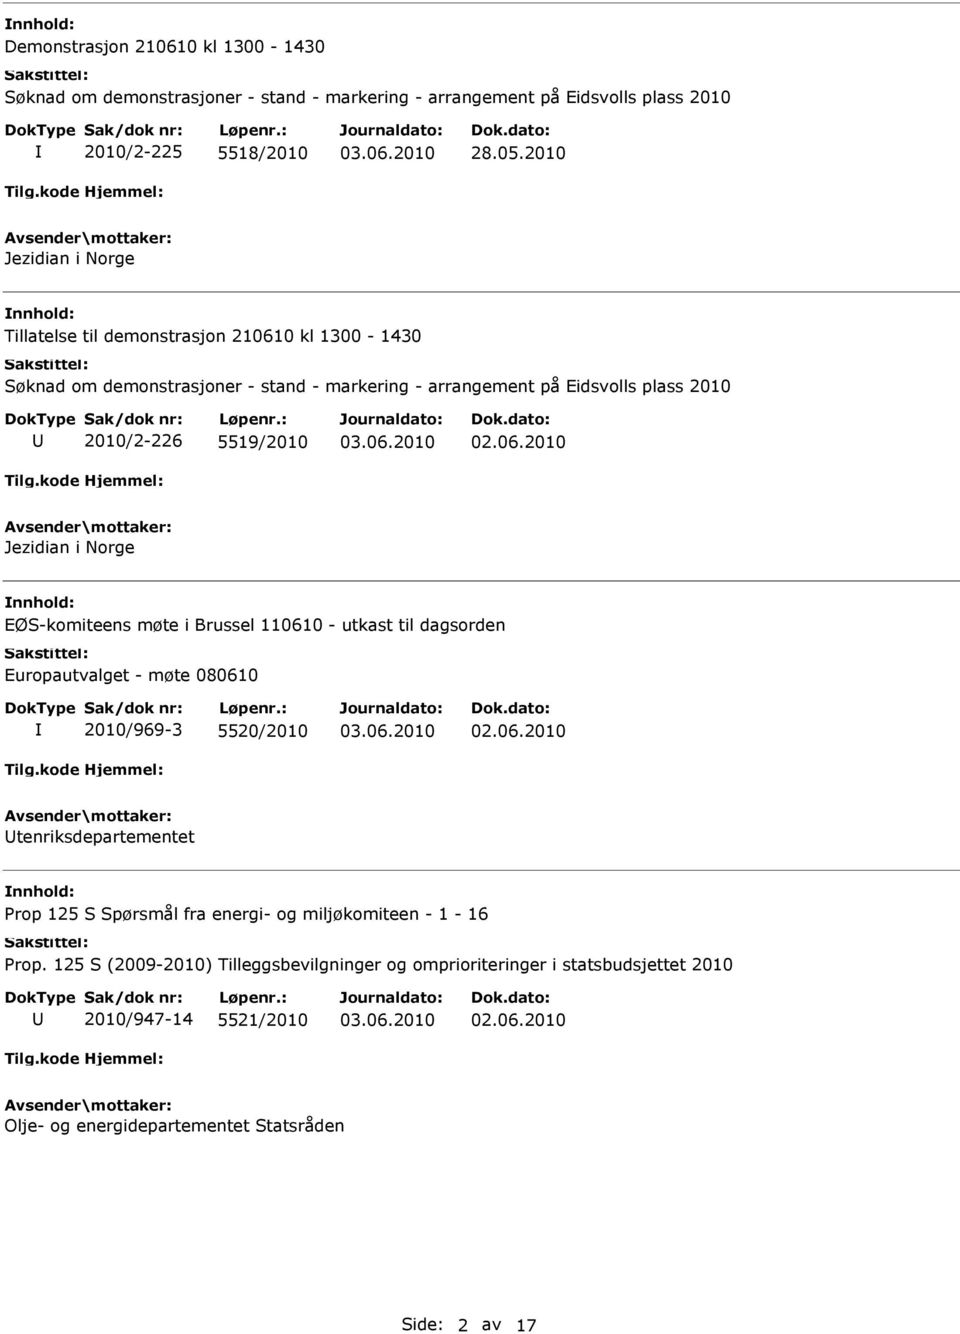 5519/2010 Jezidian i Norge EØS-komiteens møte i Brussel 110610 - utkast til dagsorden Europautvalget - møte 080610 2010/969-3 5520/2010 tenriksdepartementet Prop 125 S